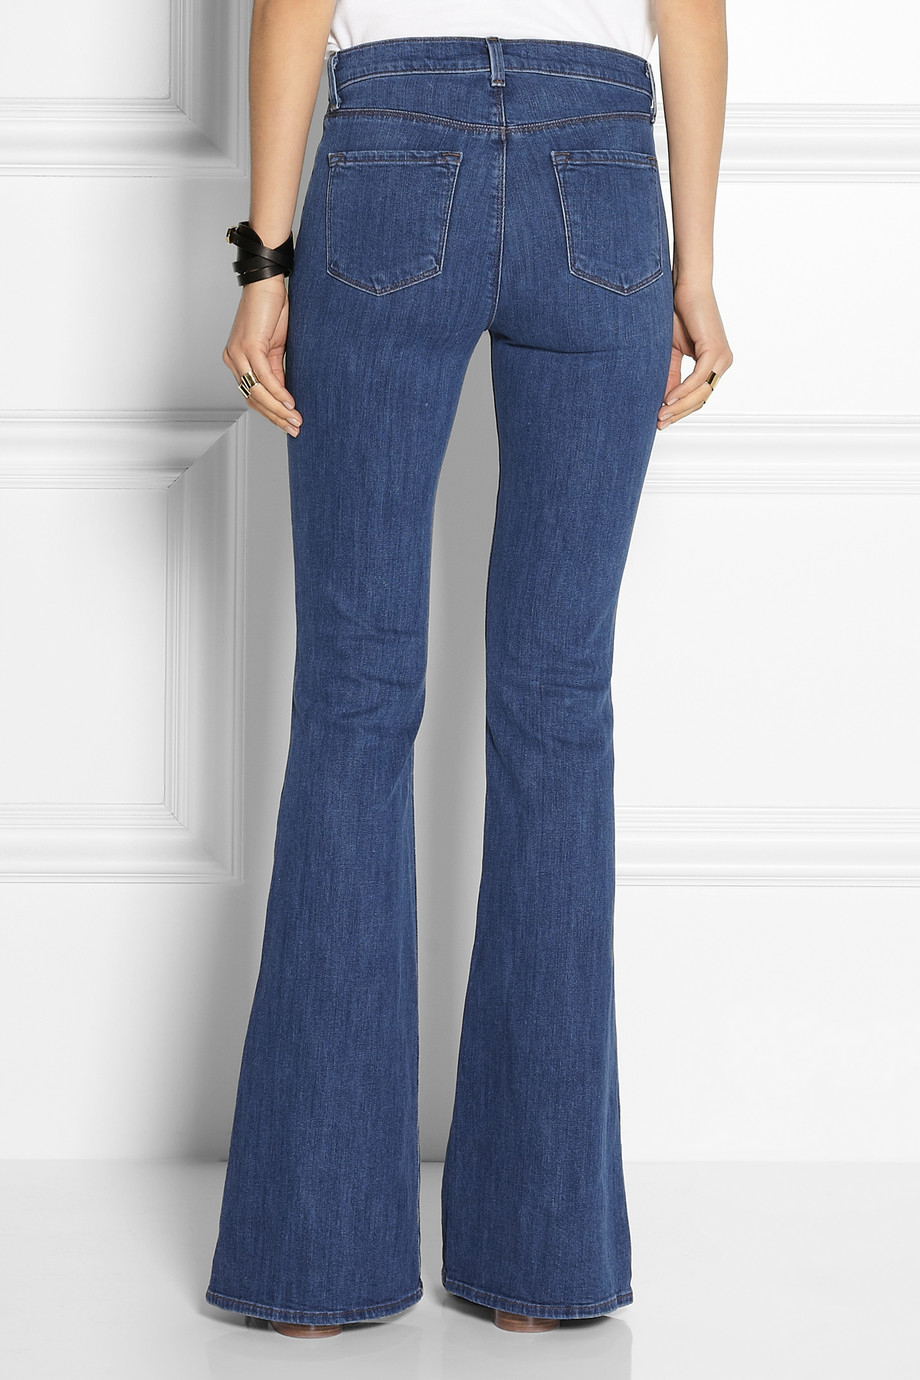 Lyst - J brand Valentina High-Rise Flared Jeans in Blue